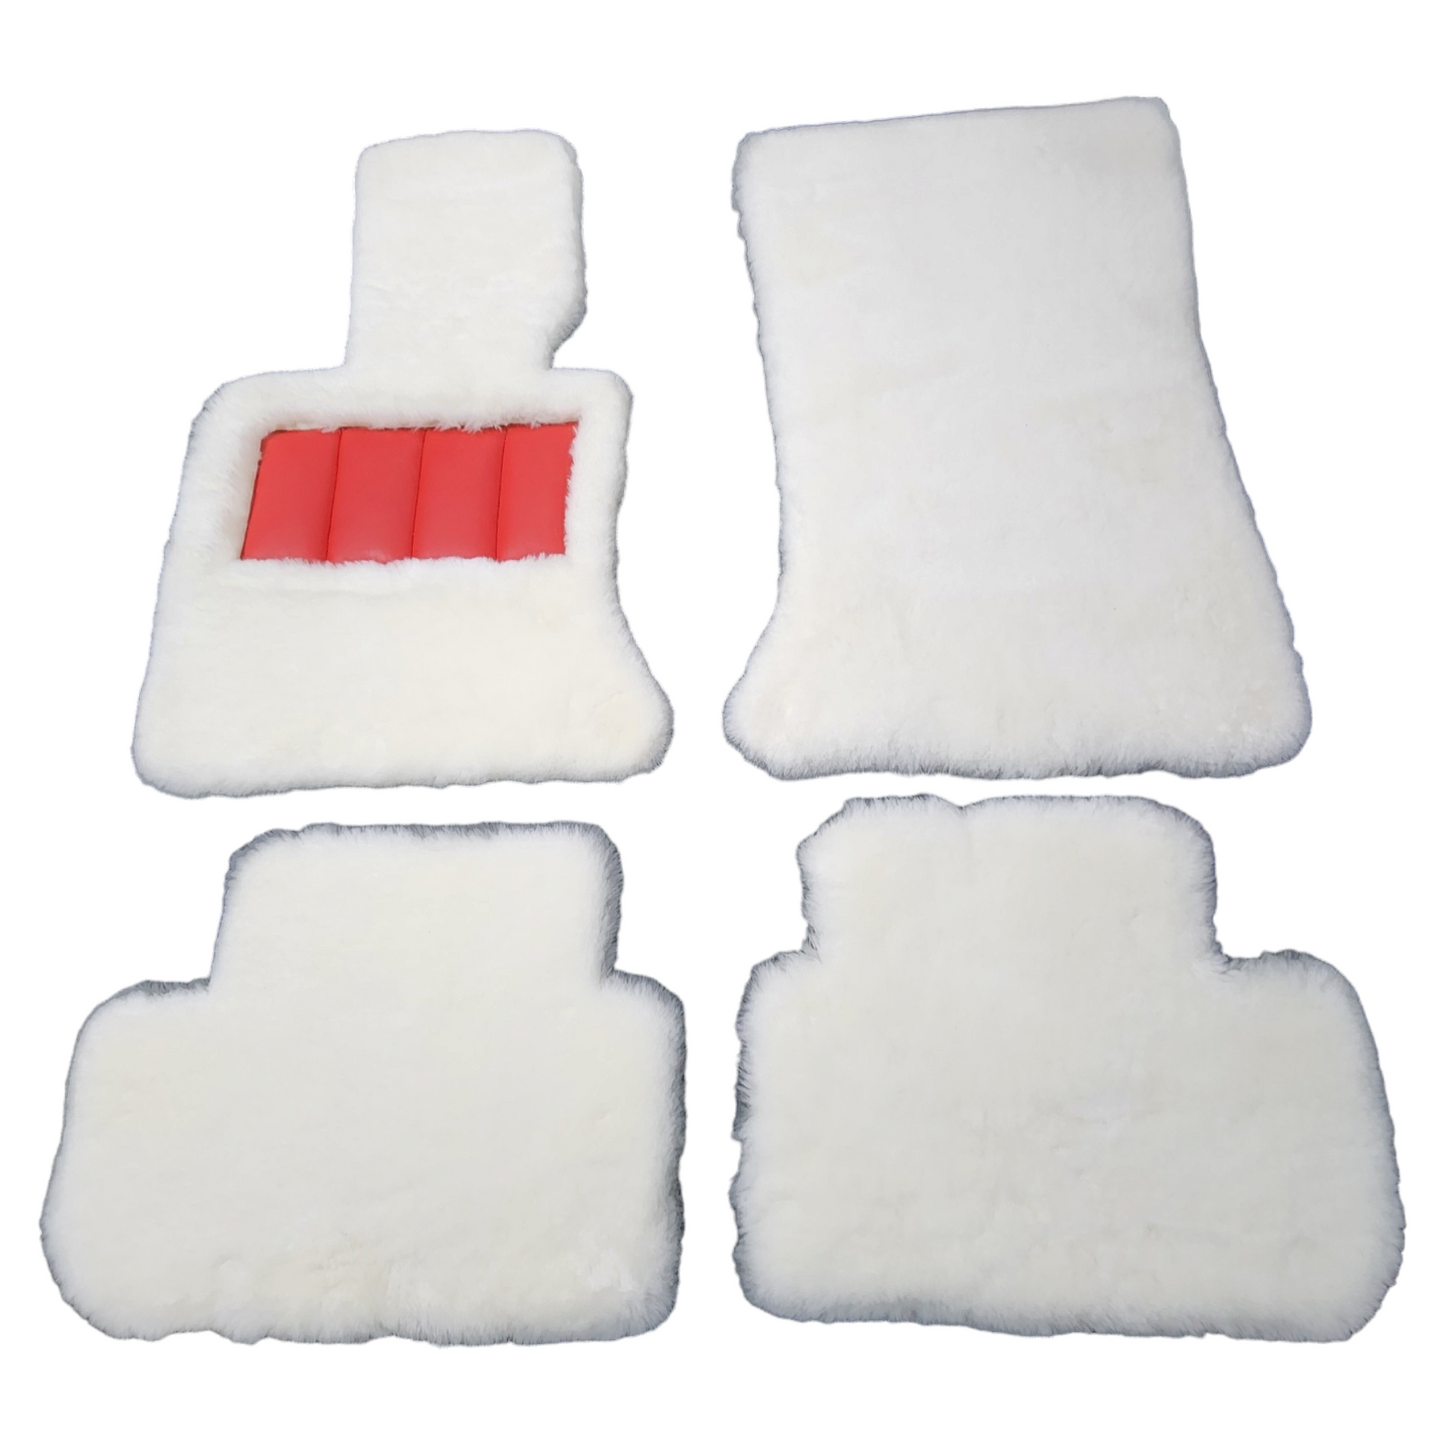 White Genuine Sheepskin Floor Mats Plush 1 Inch Thickness with Colored Heelpad